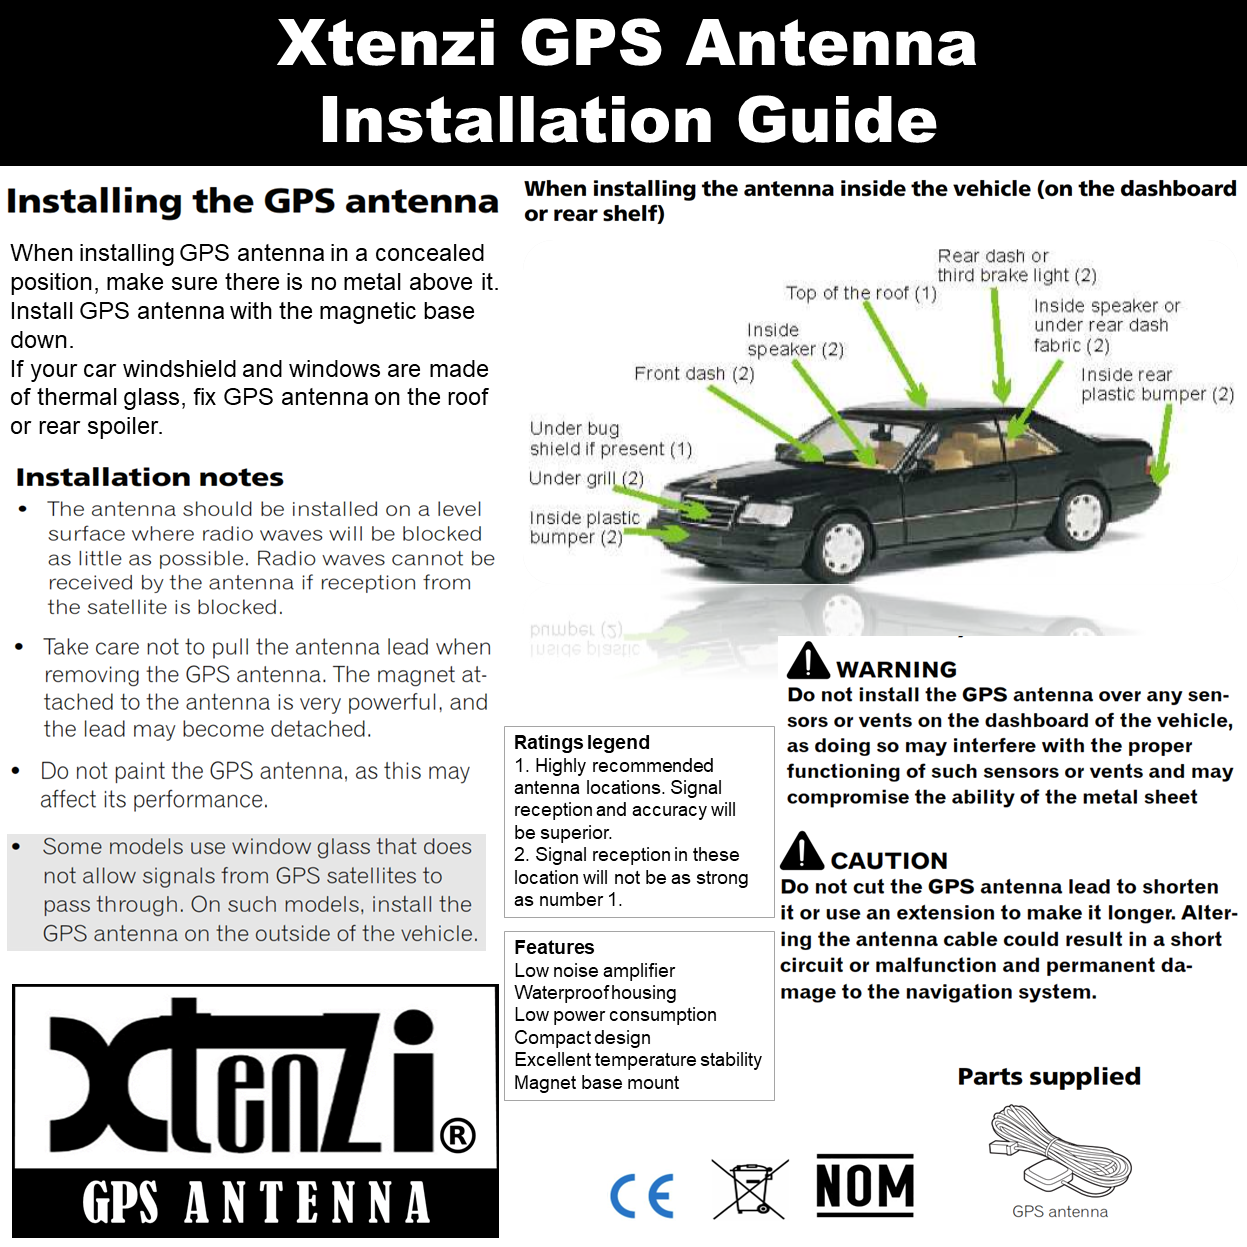 Xtenzi GPS Antenna XT91832 for PioneerAVIC5201NEX U310BT X8610BS Z150BH SPHDA110